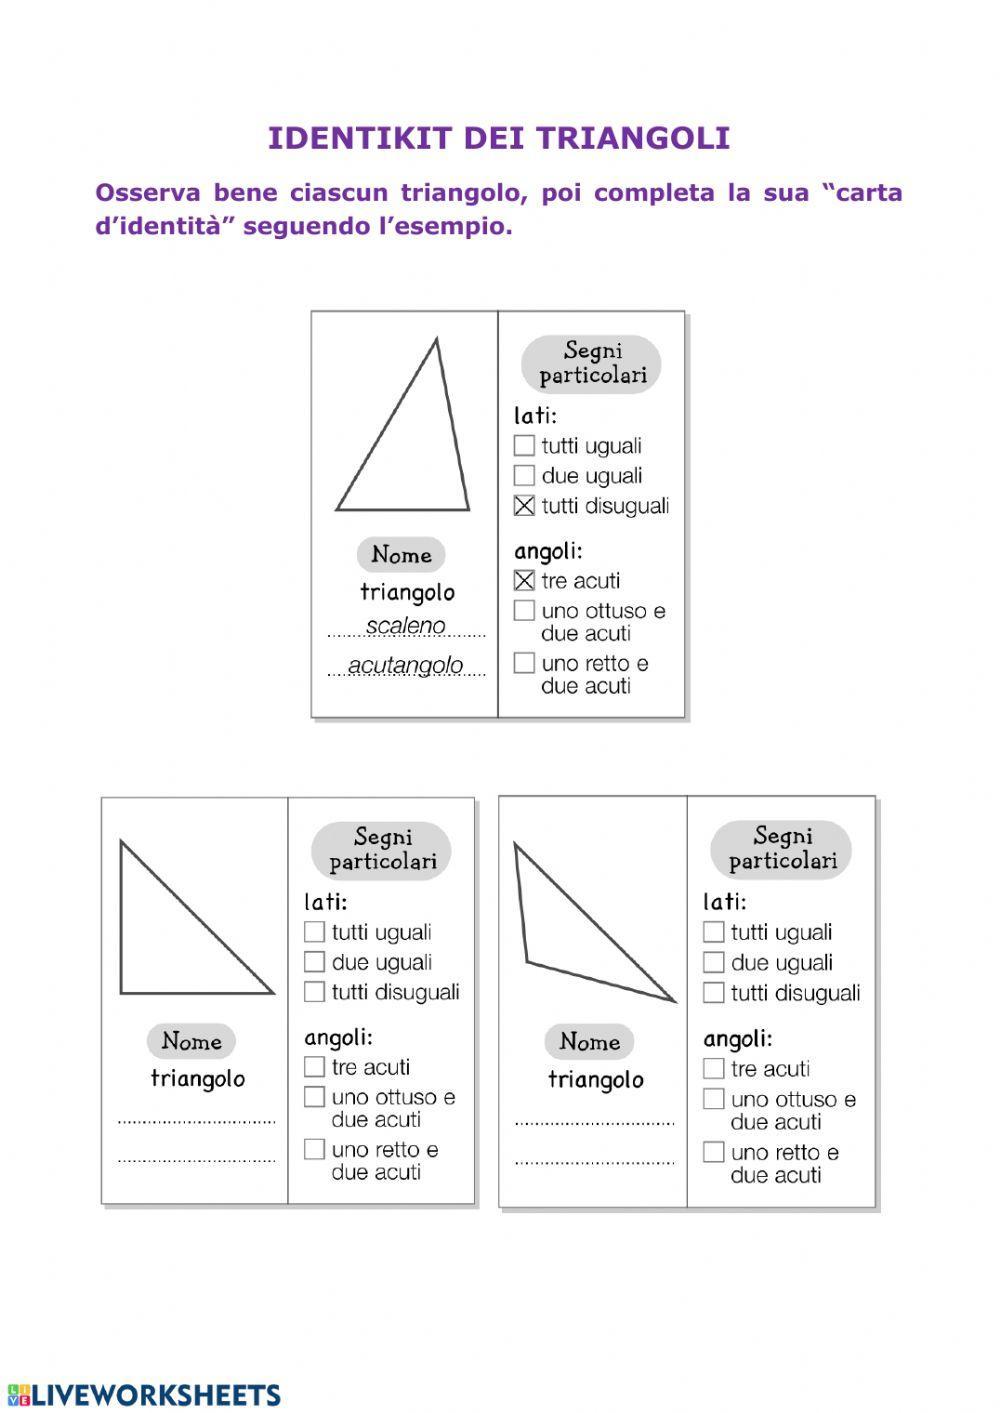 Identikit dei triangoli